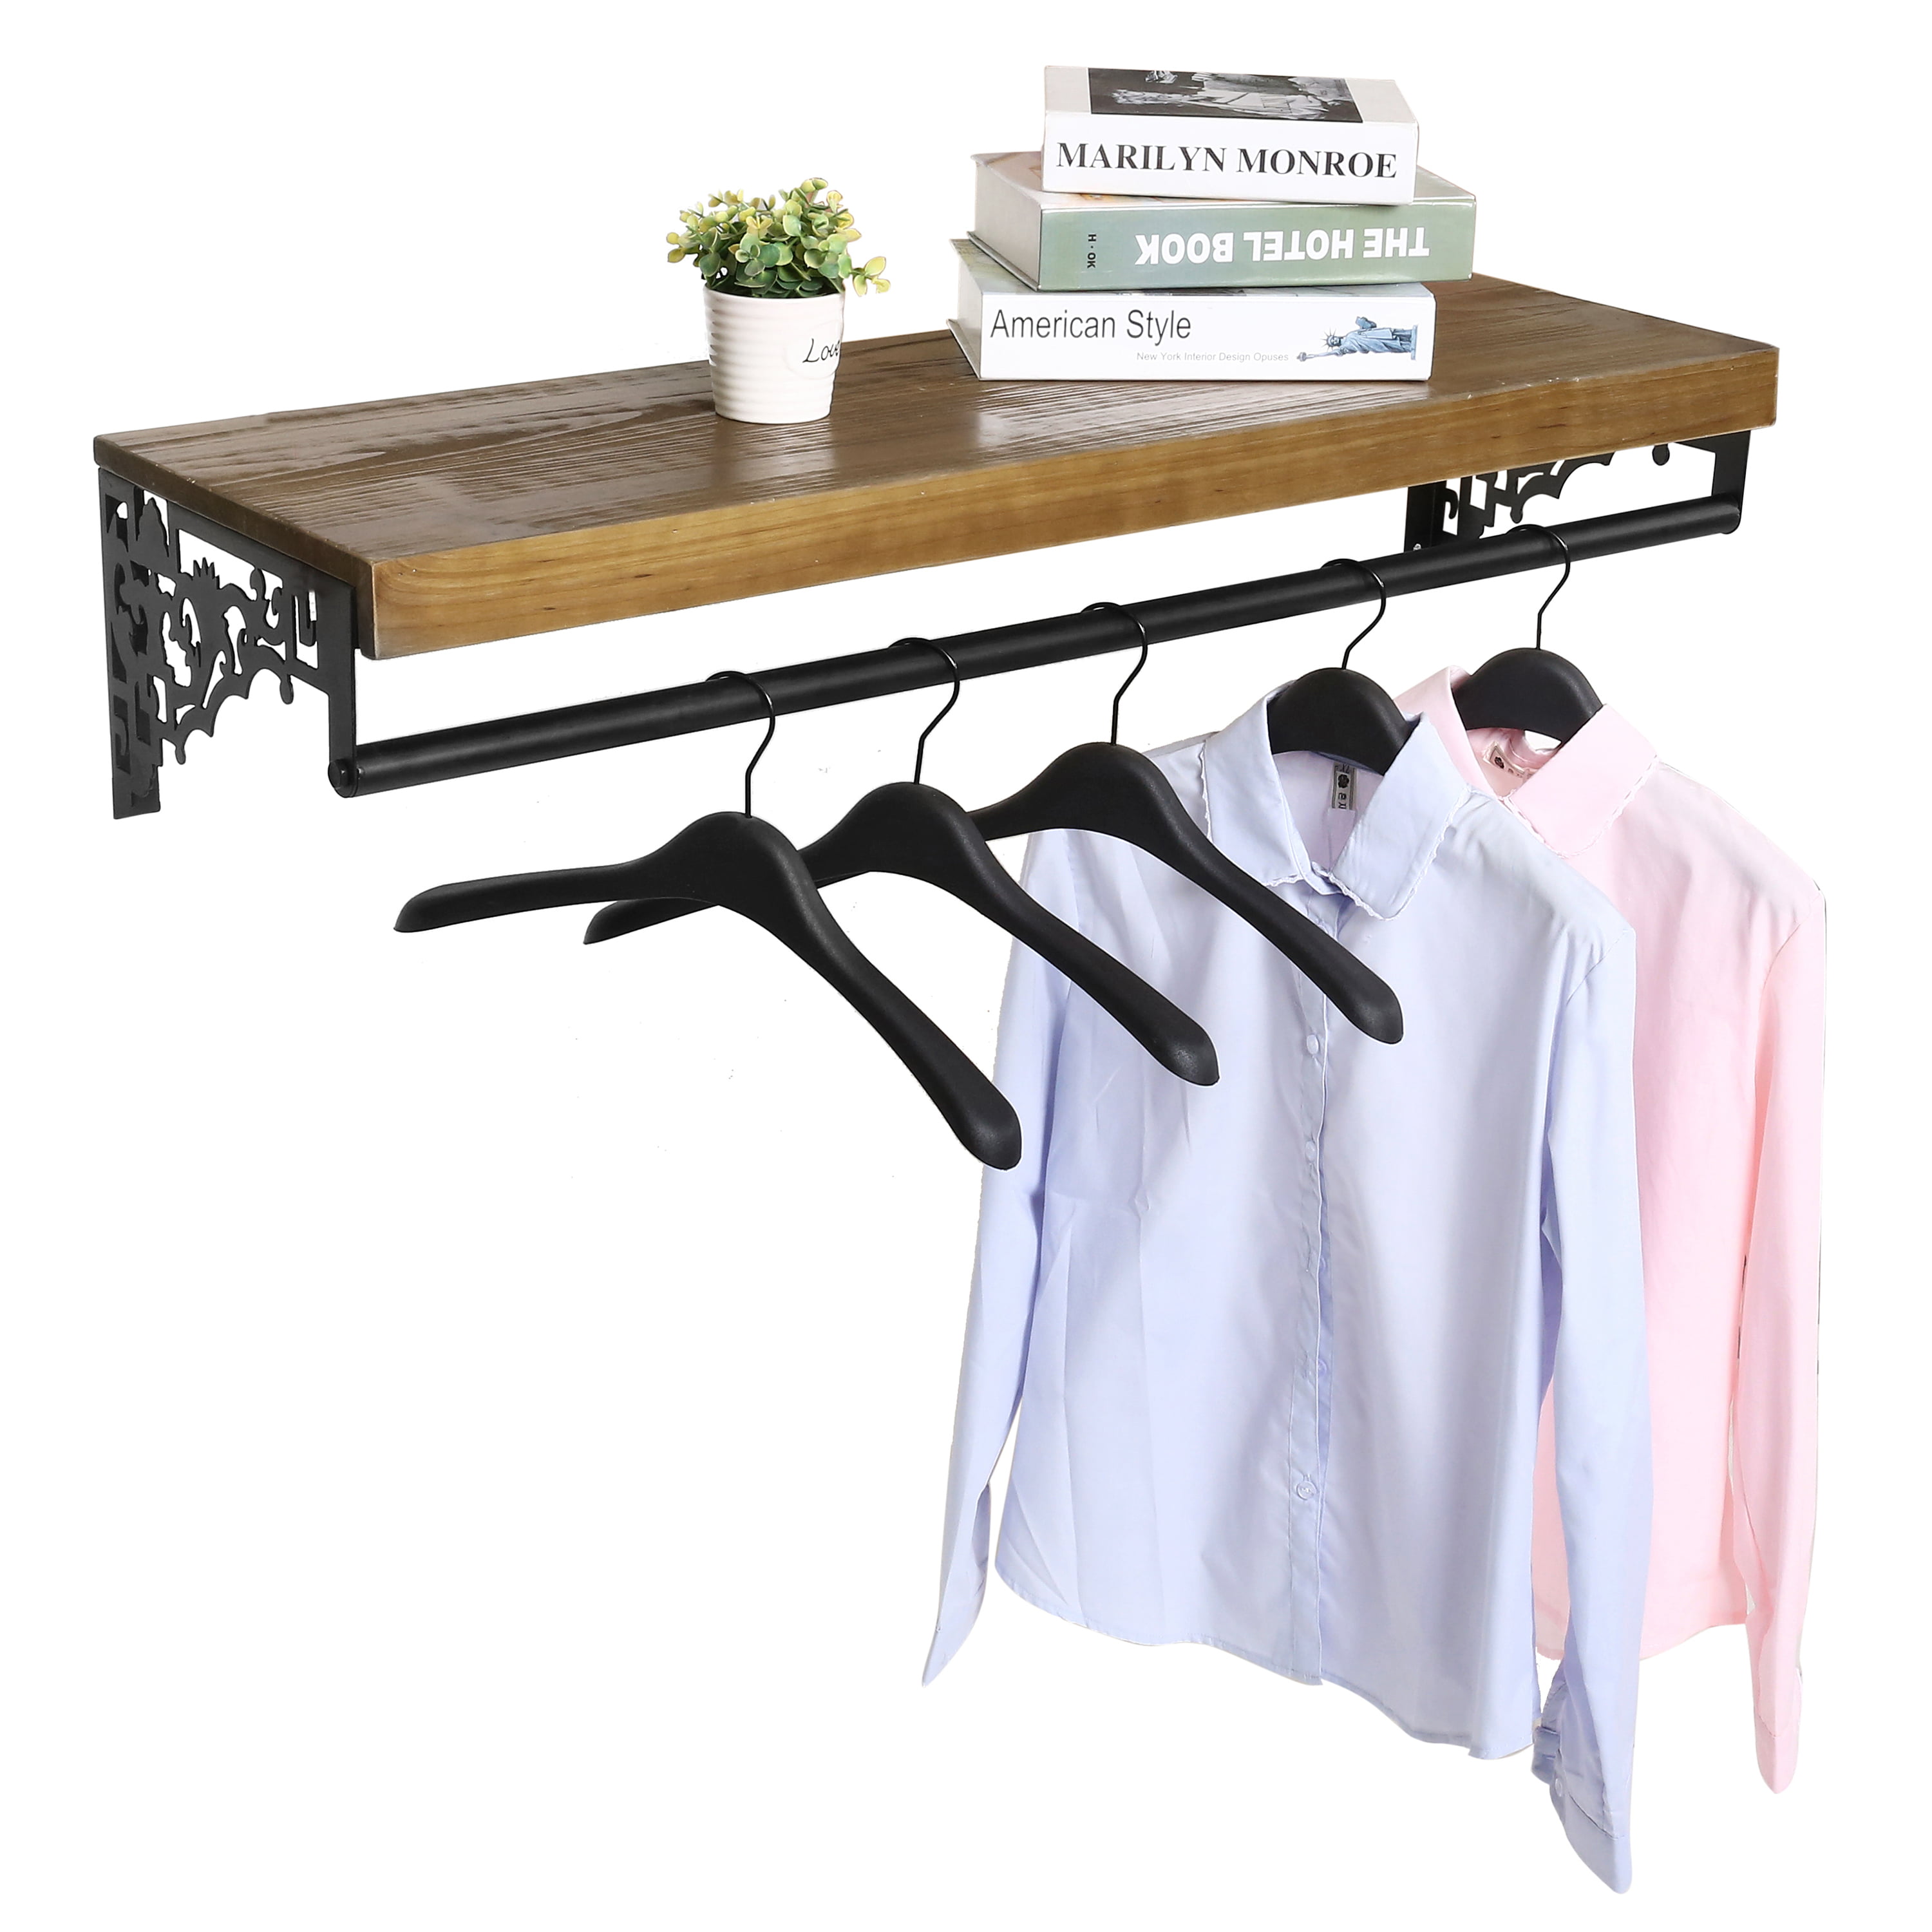 THREE Floating Shelves With ONE Clothing Bar, Rustic Pipe Shelf, Industrial  Wood Shelf, Garment Rack, Custom Closet Floating Shelves 